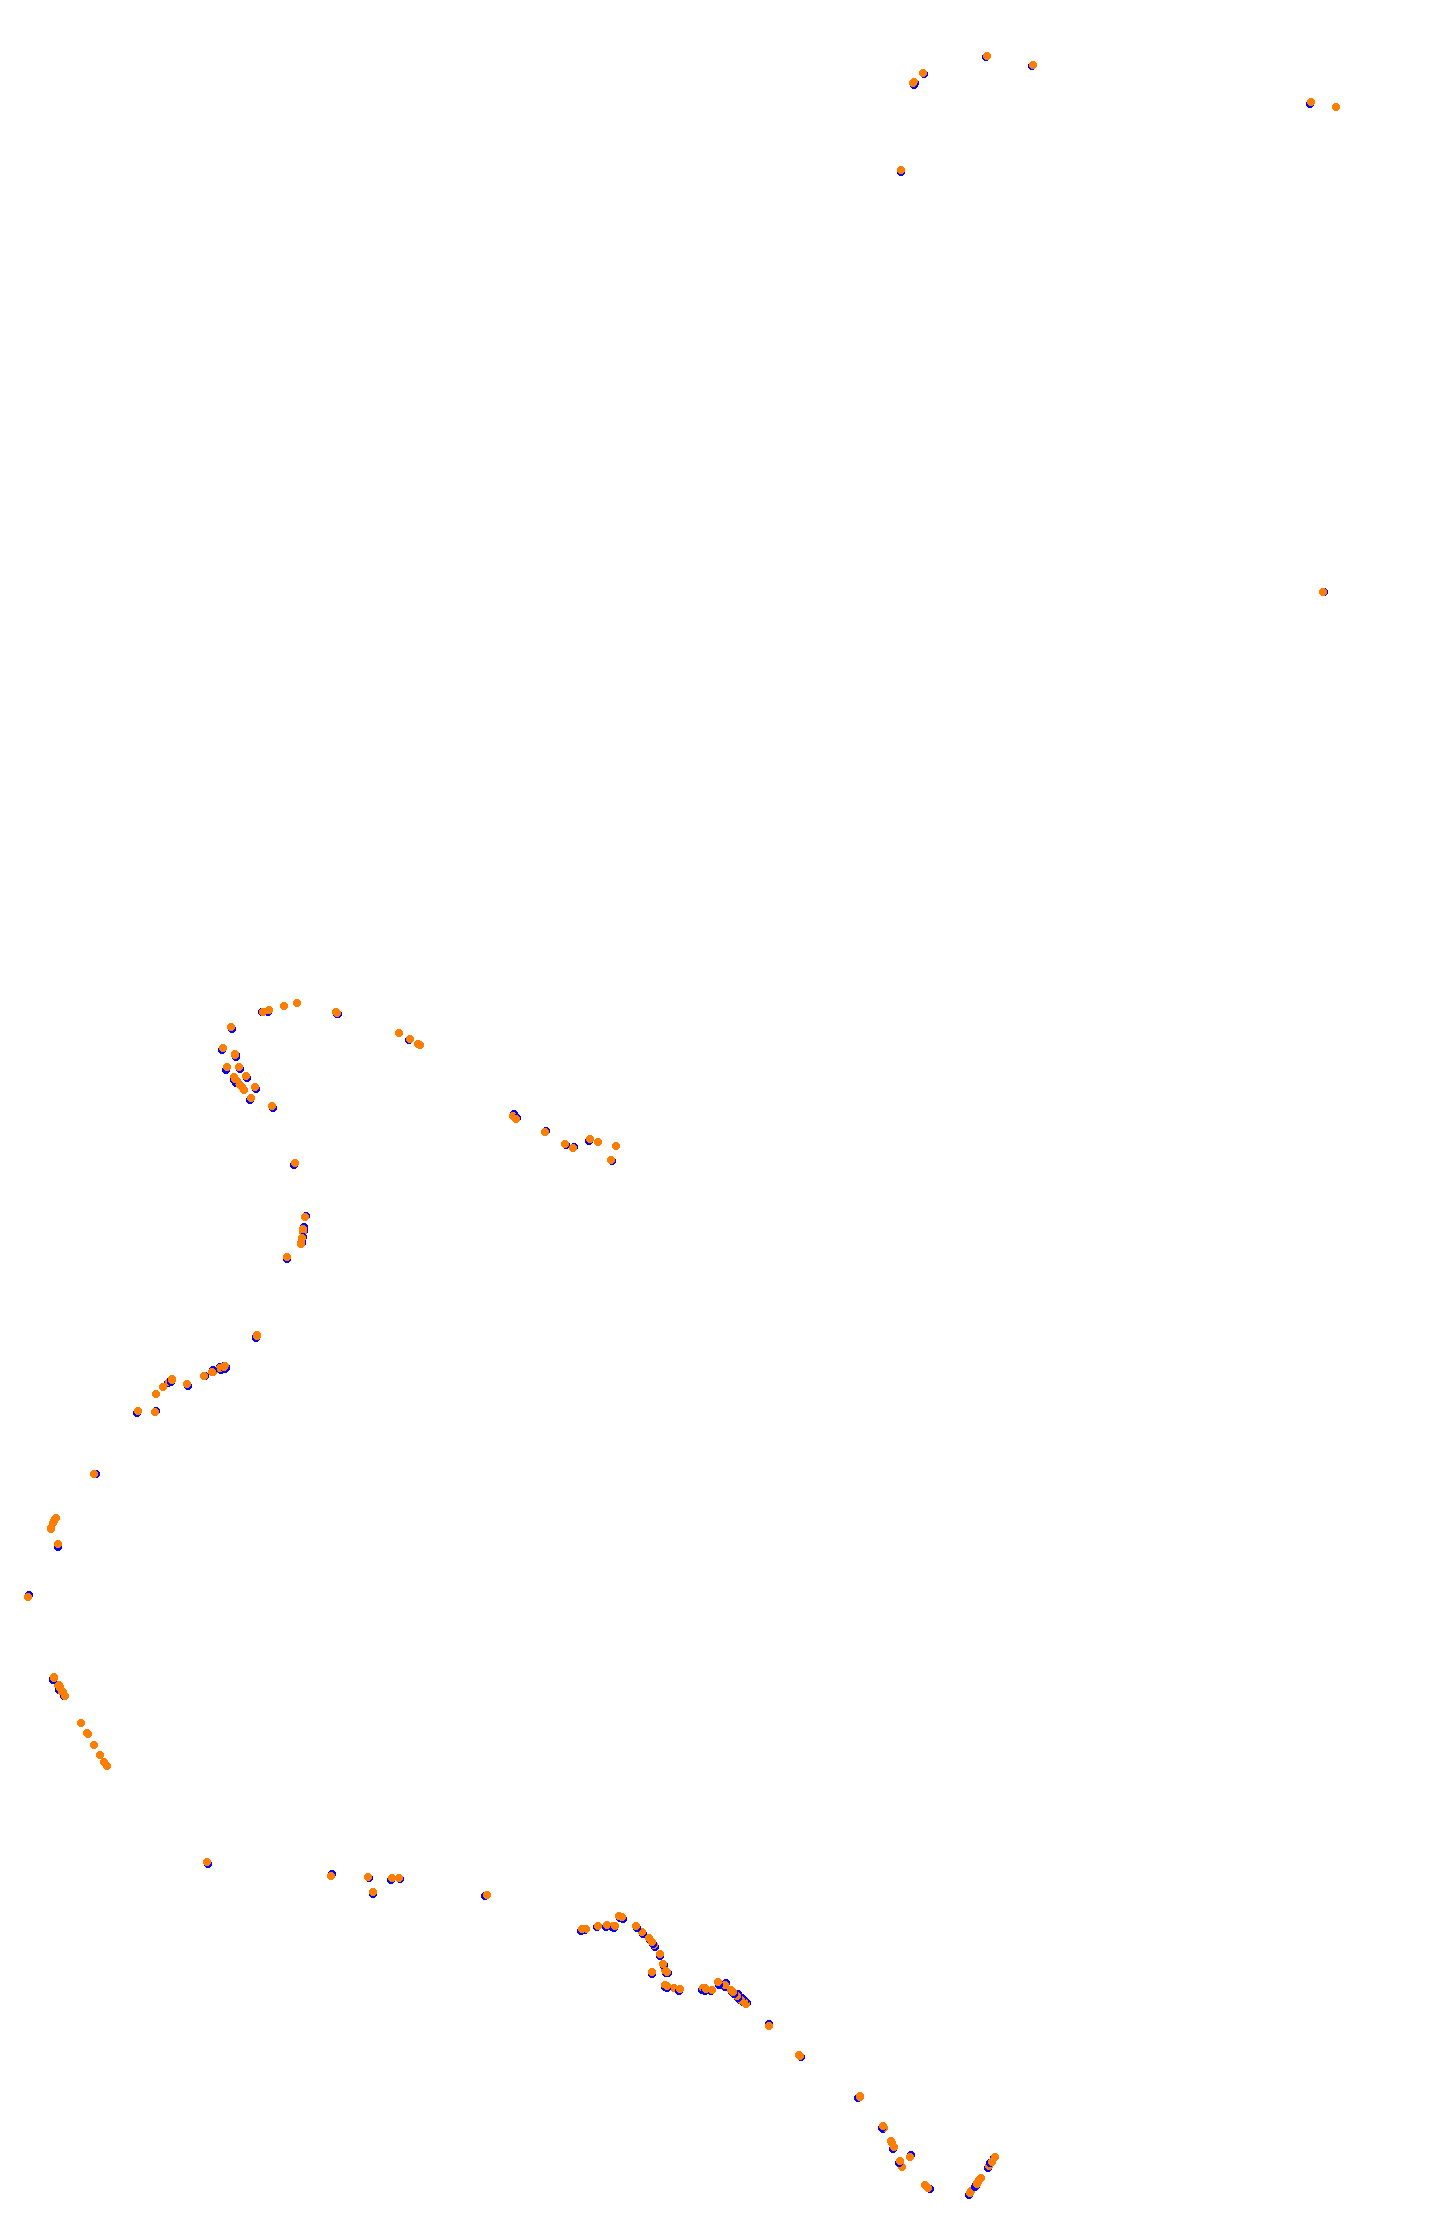 Bathurst (Mount Panorama) collisions